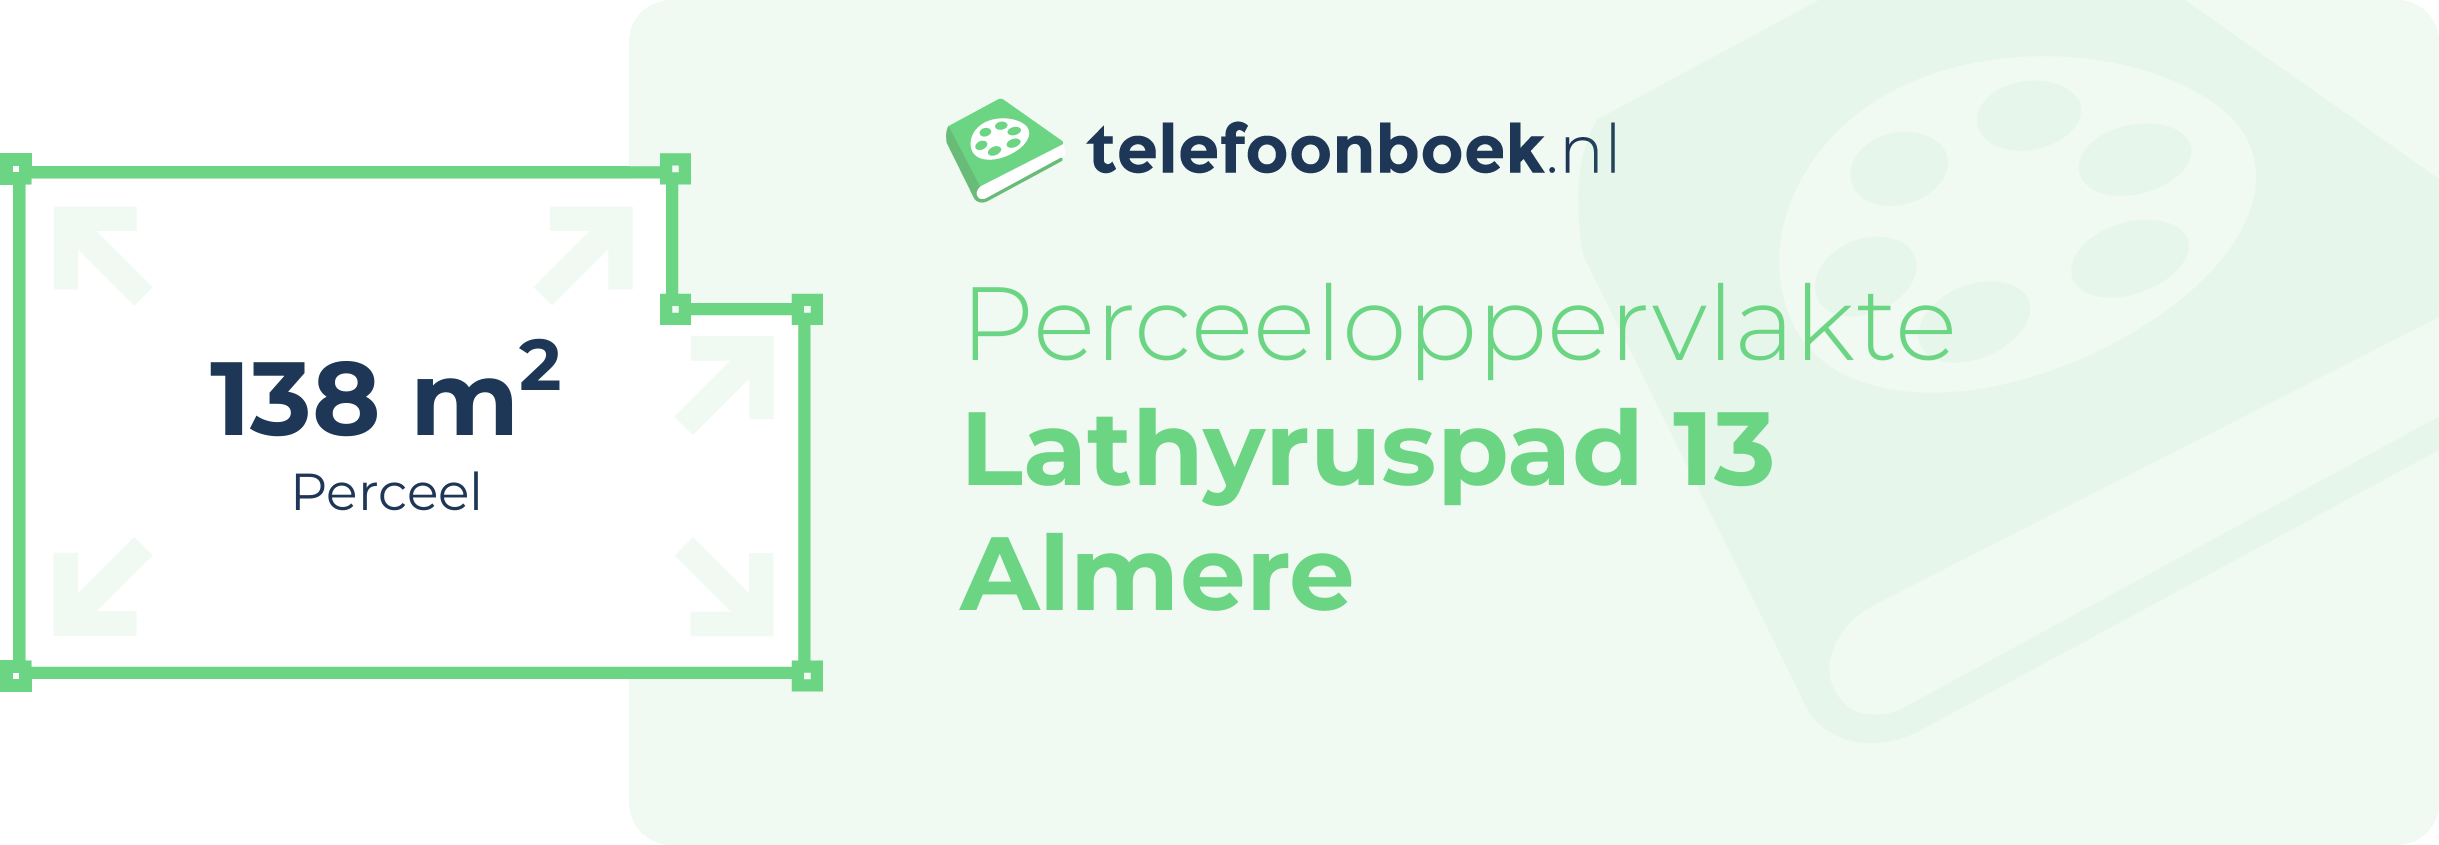 Perceeloppervlakte Lathyruspad 13 Almere